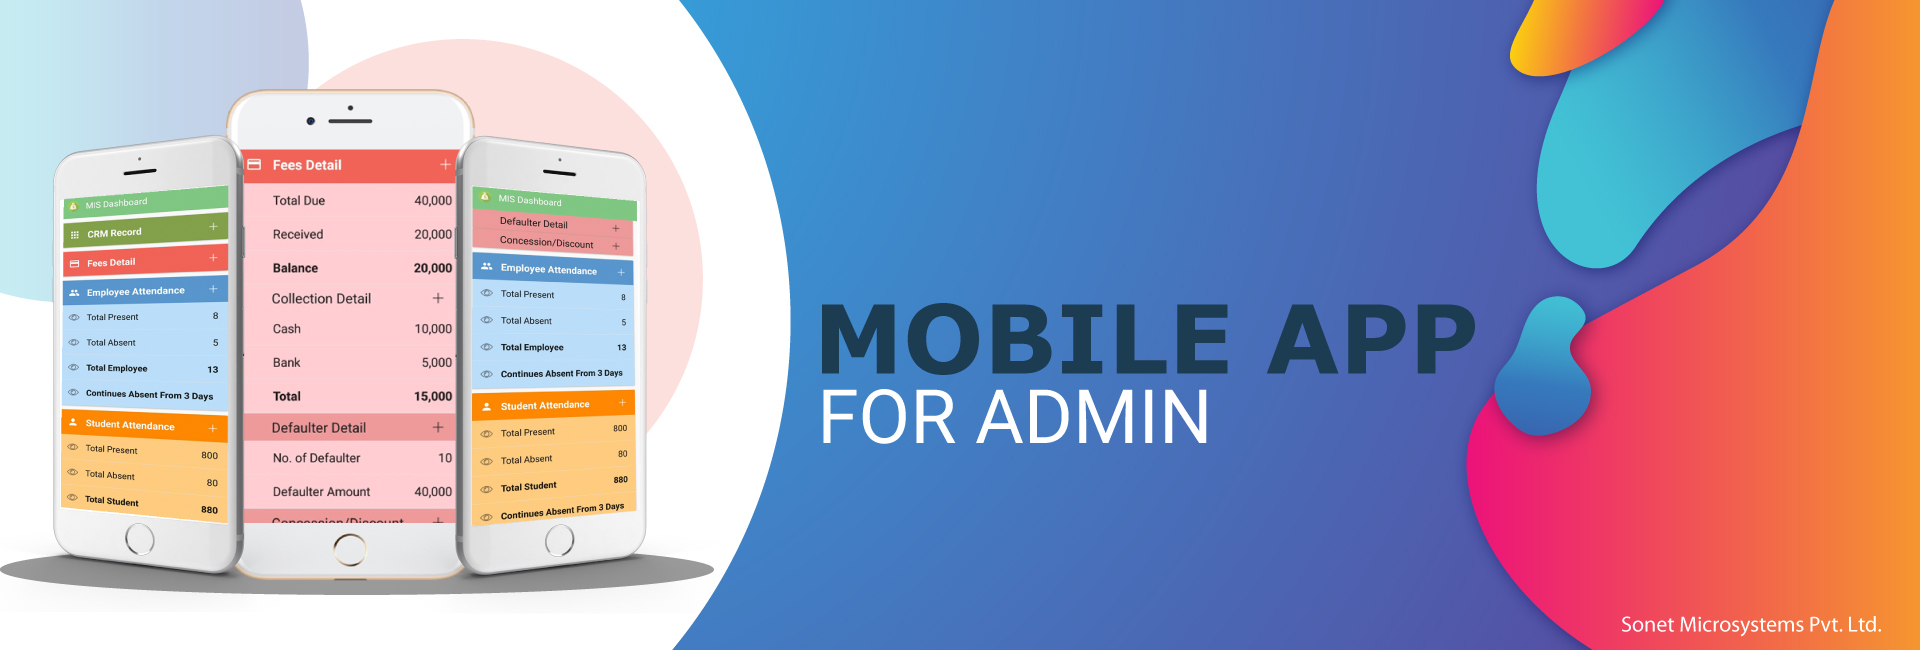 mobile app for school management, android app for university management